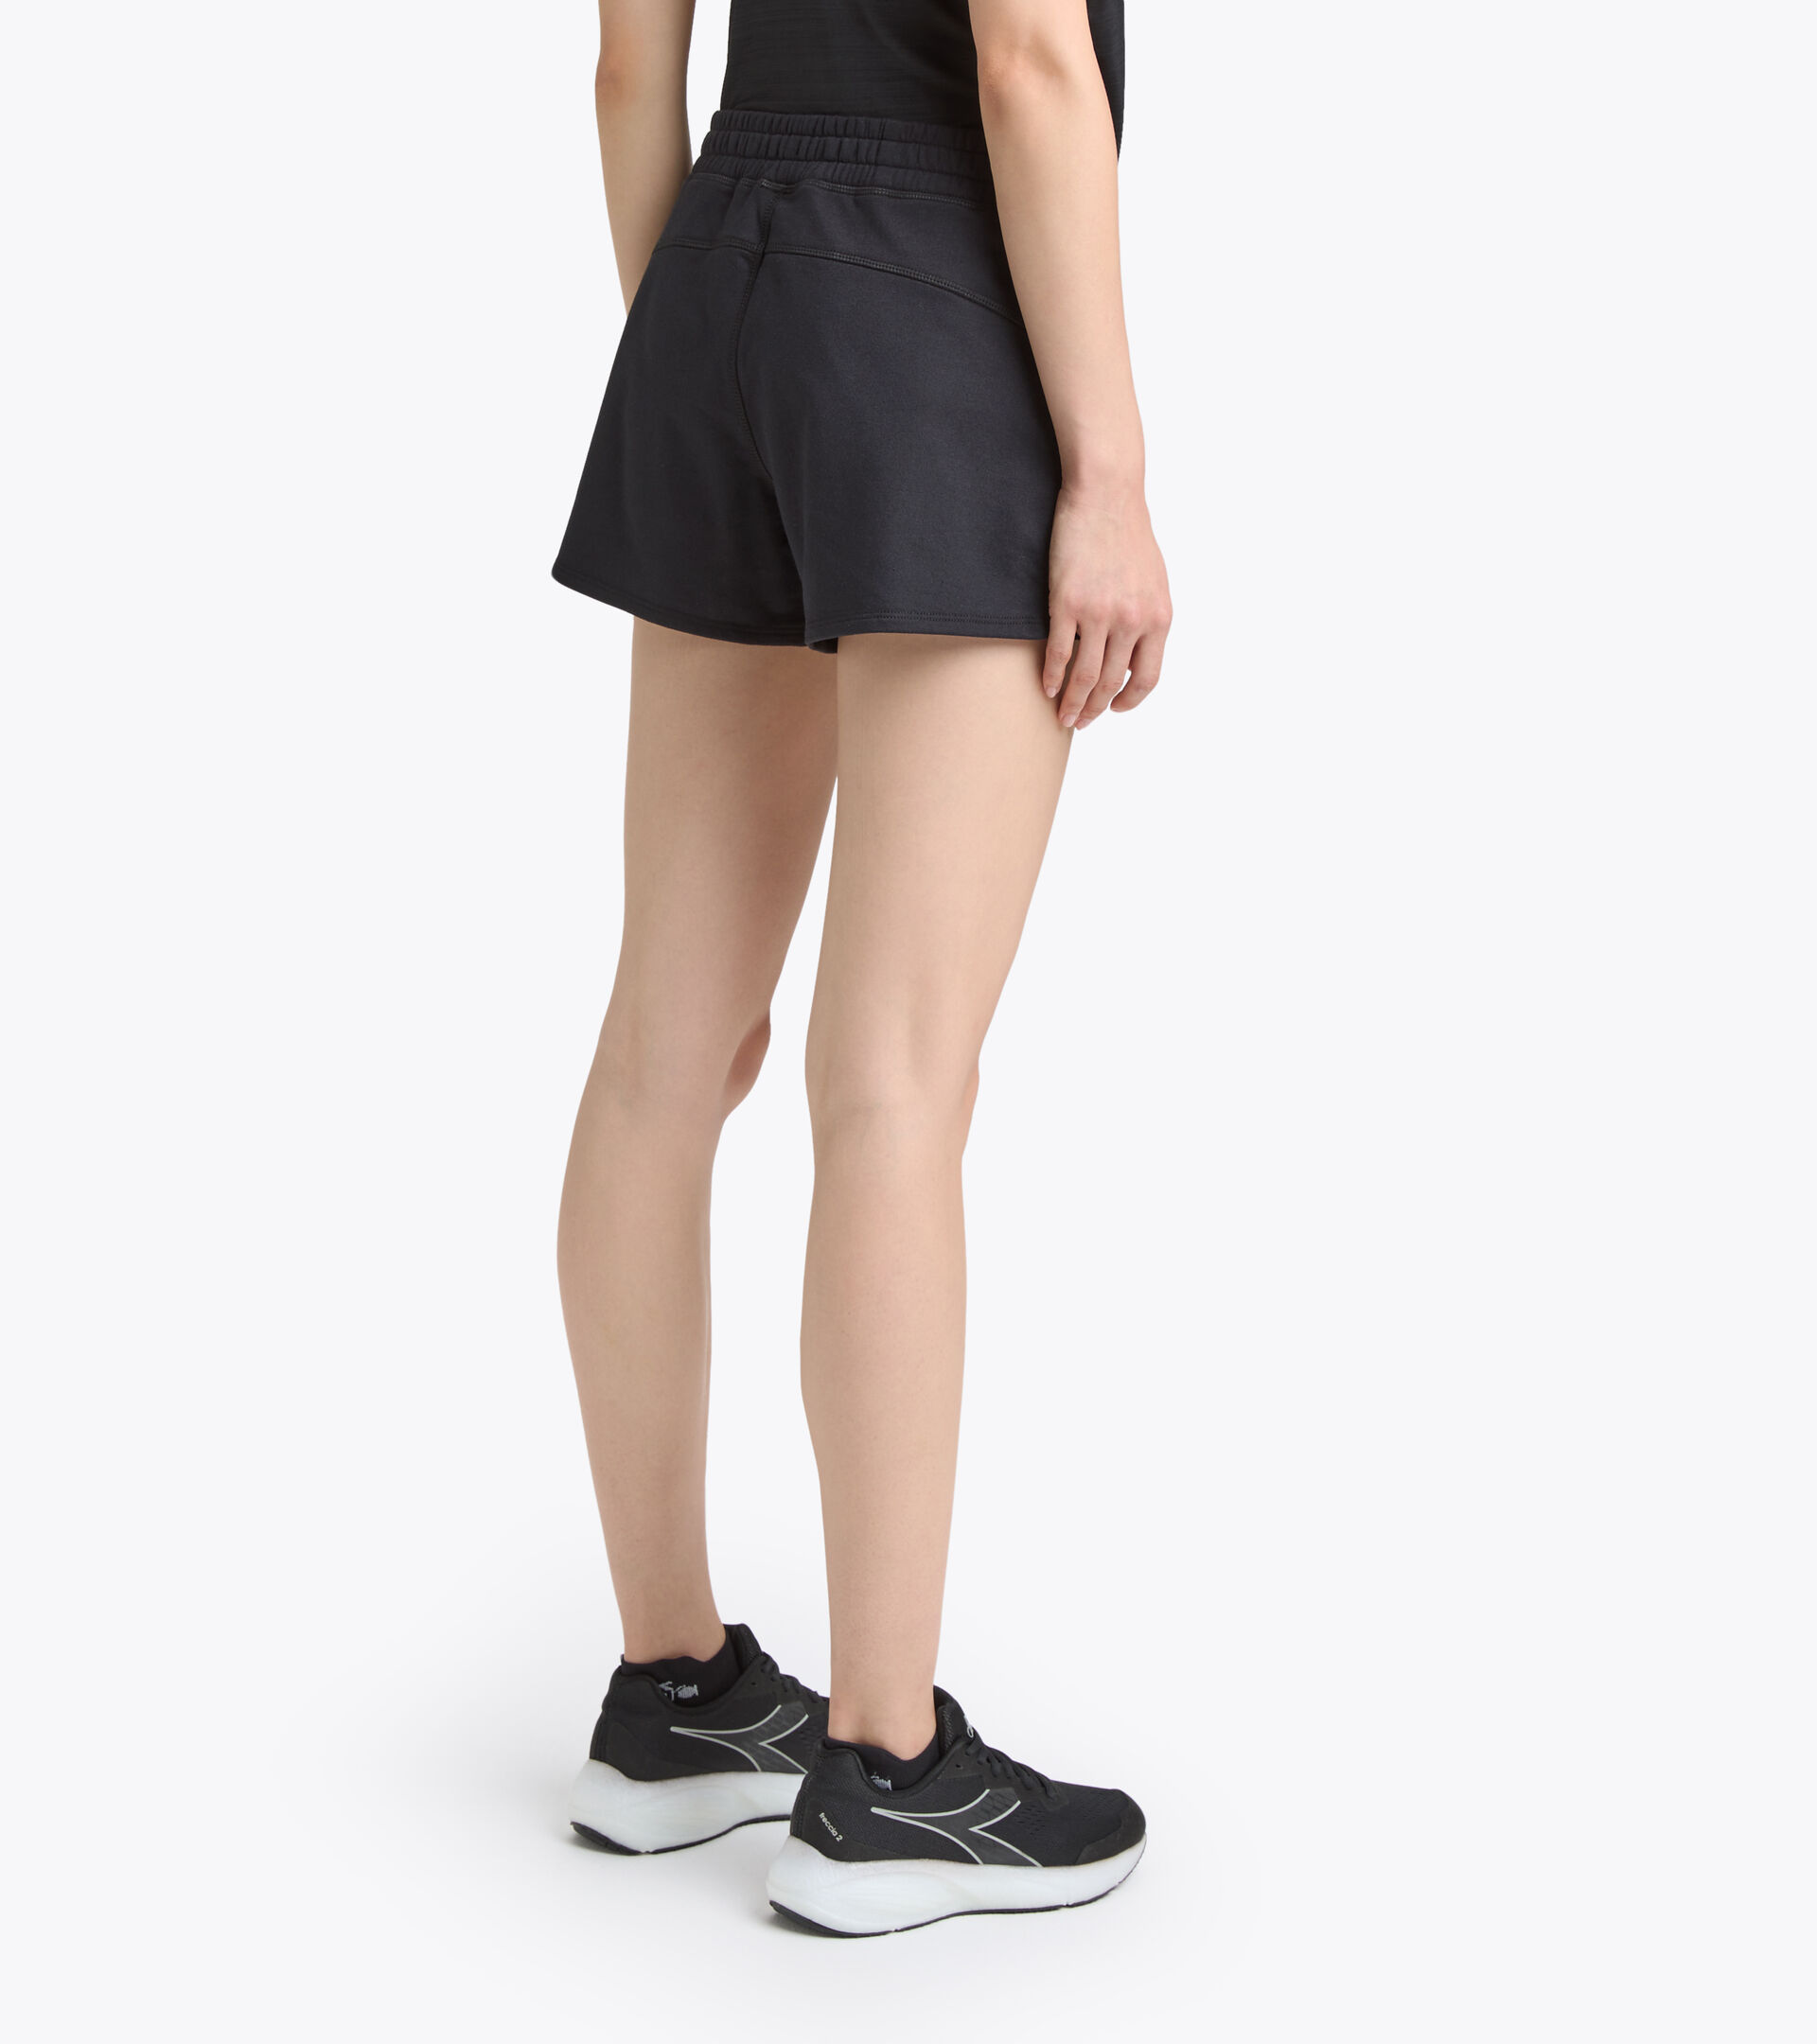 Training shorts - Women’s L. SHORT 9CM BUDDYFIT BLACK - Diadora